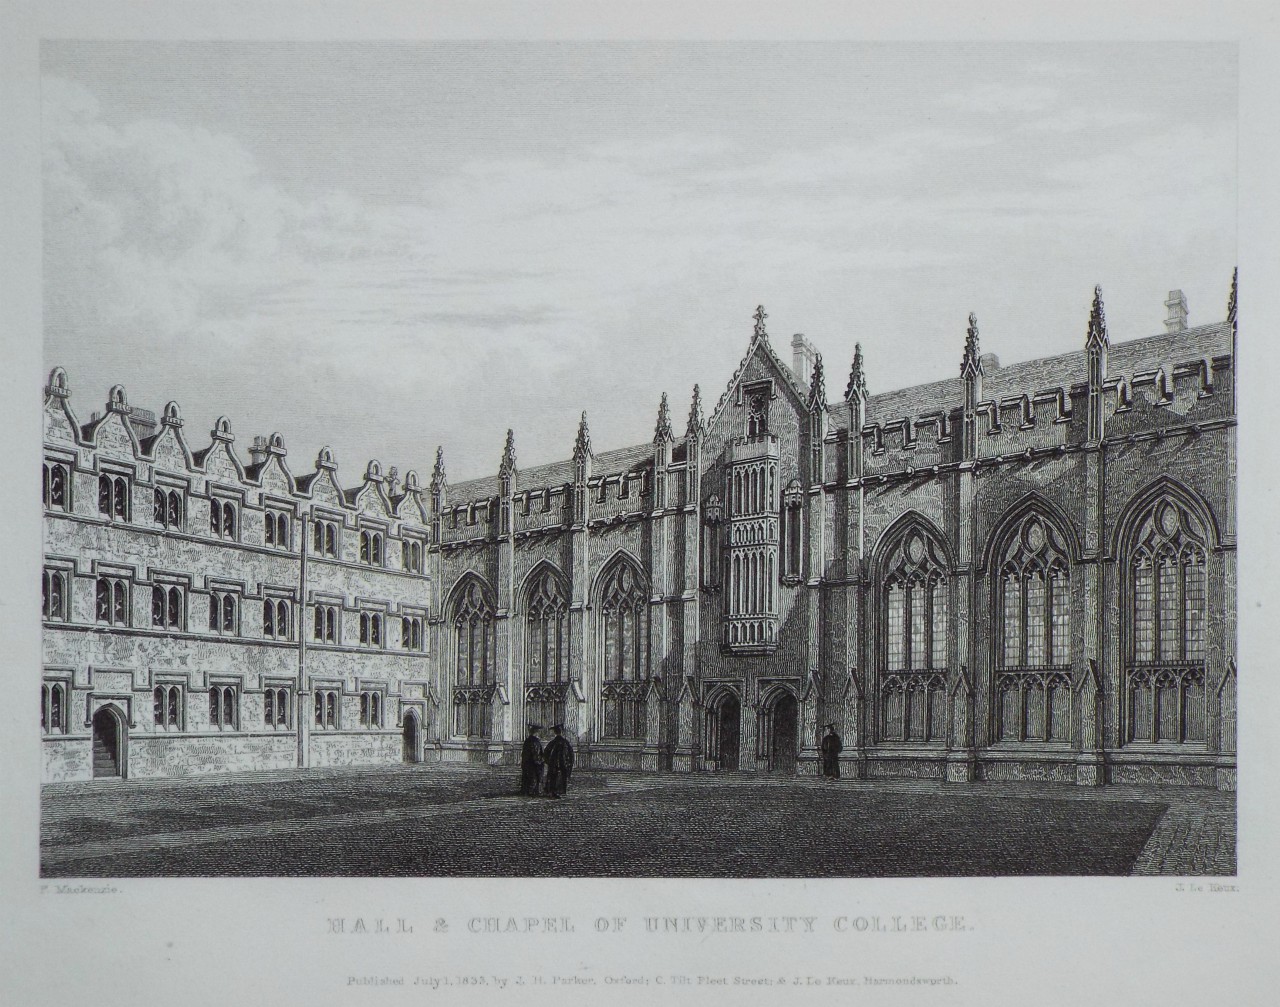 Print - Hall & Chapel of University College. - Le